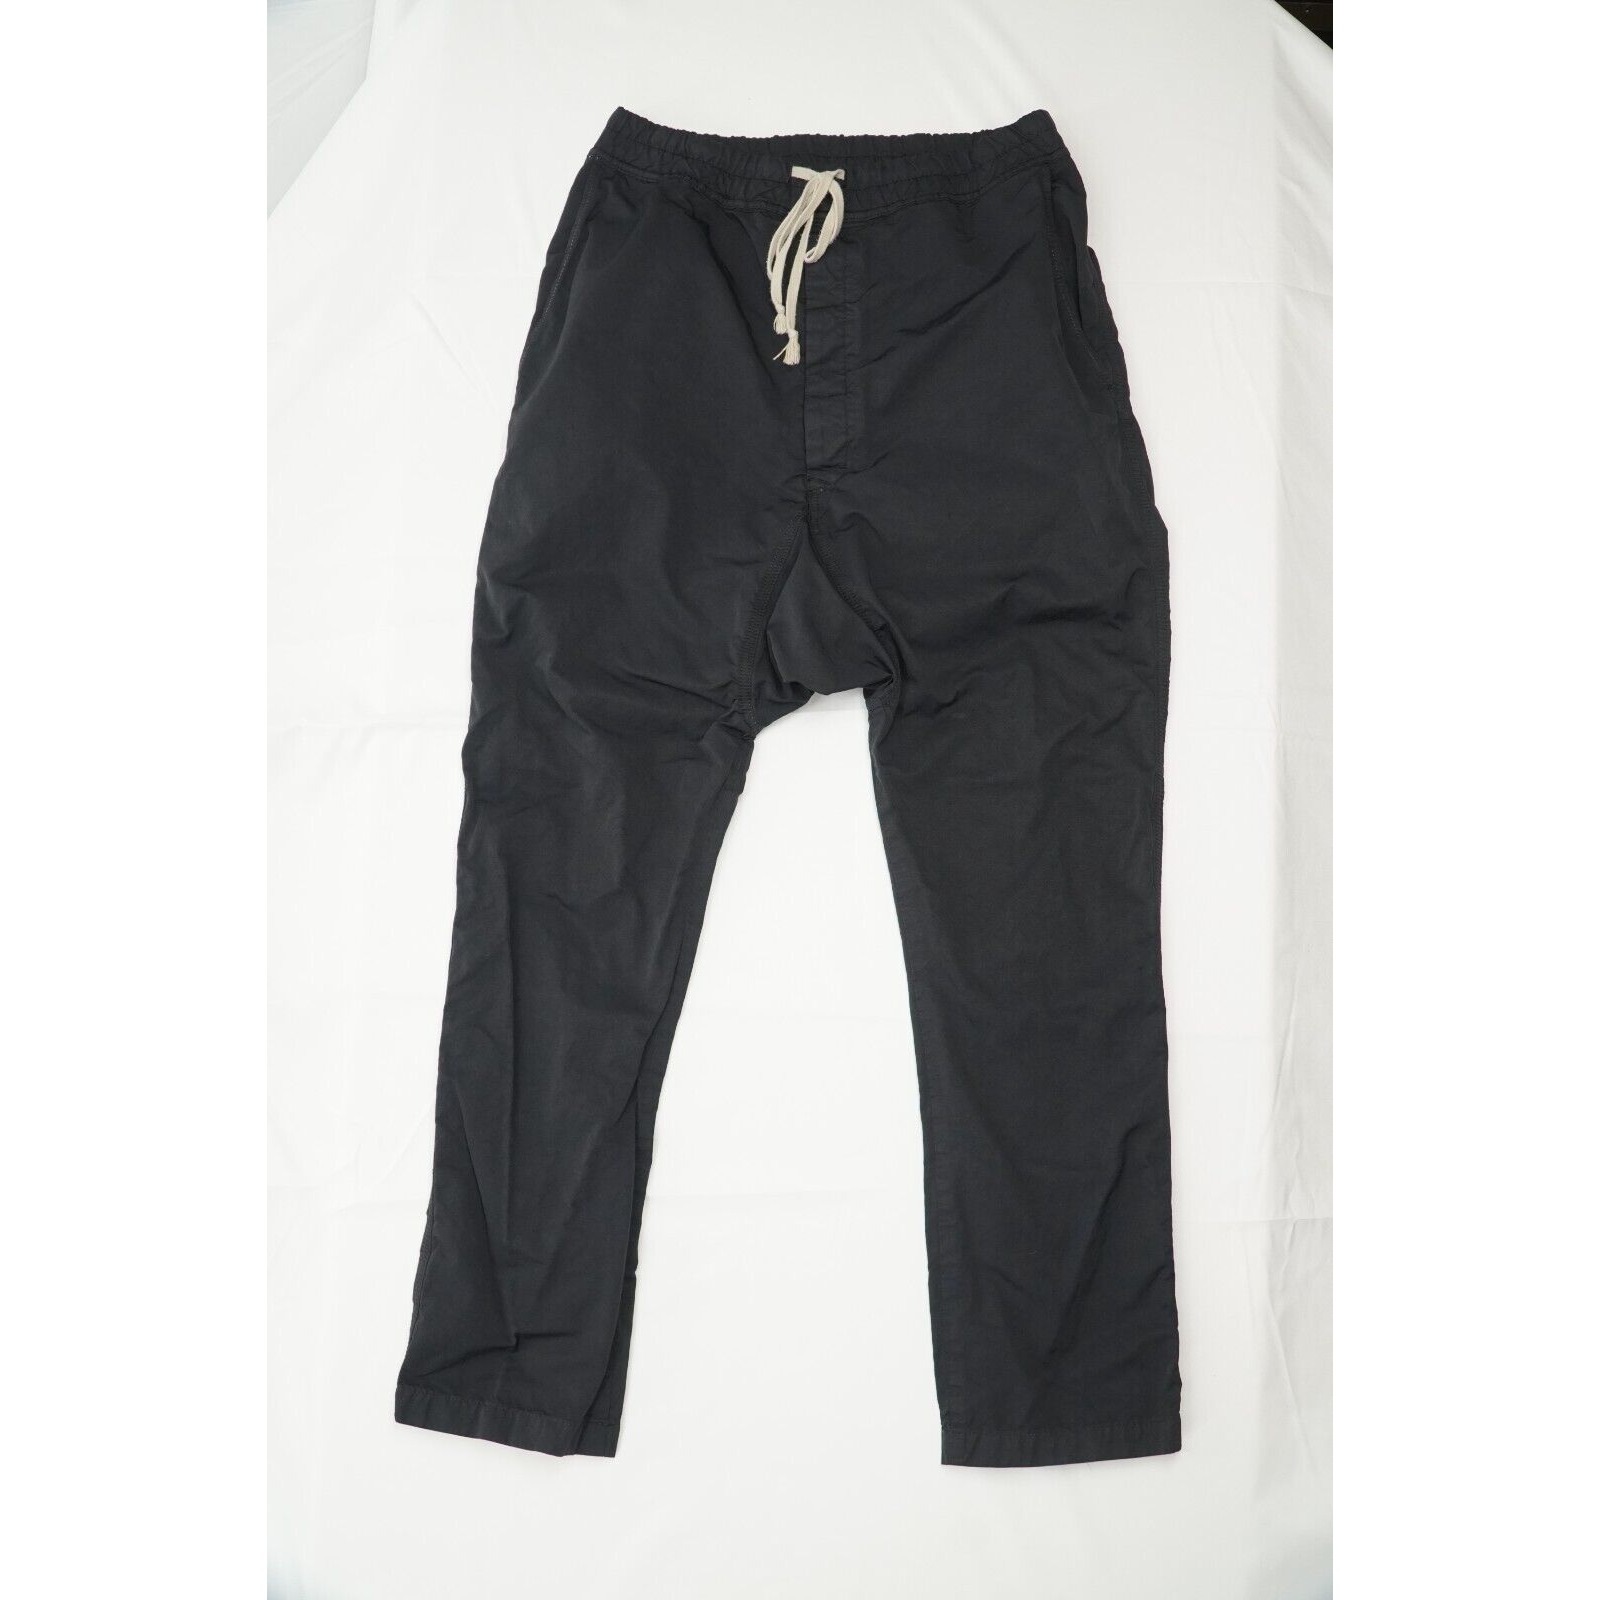 Black Lounge Pants Elastic Drawstring Drop Crotch Large - 1